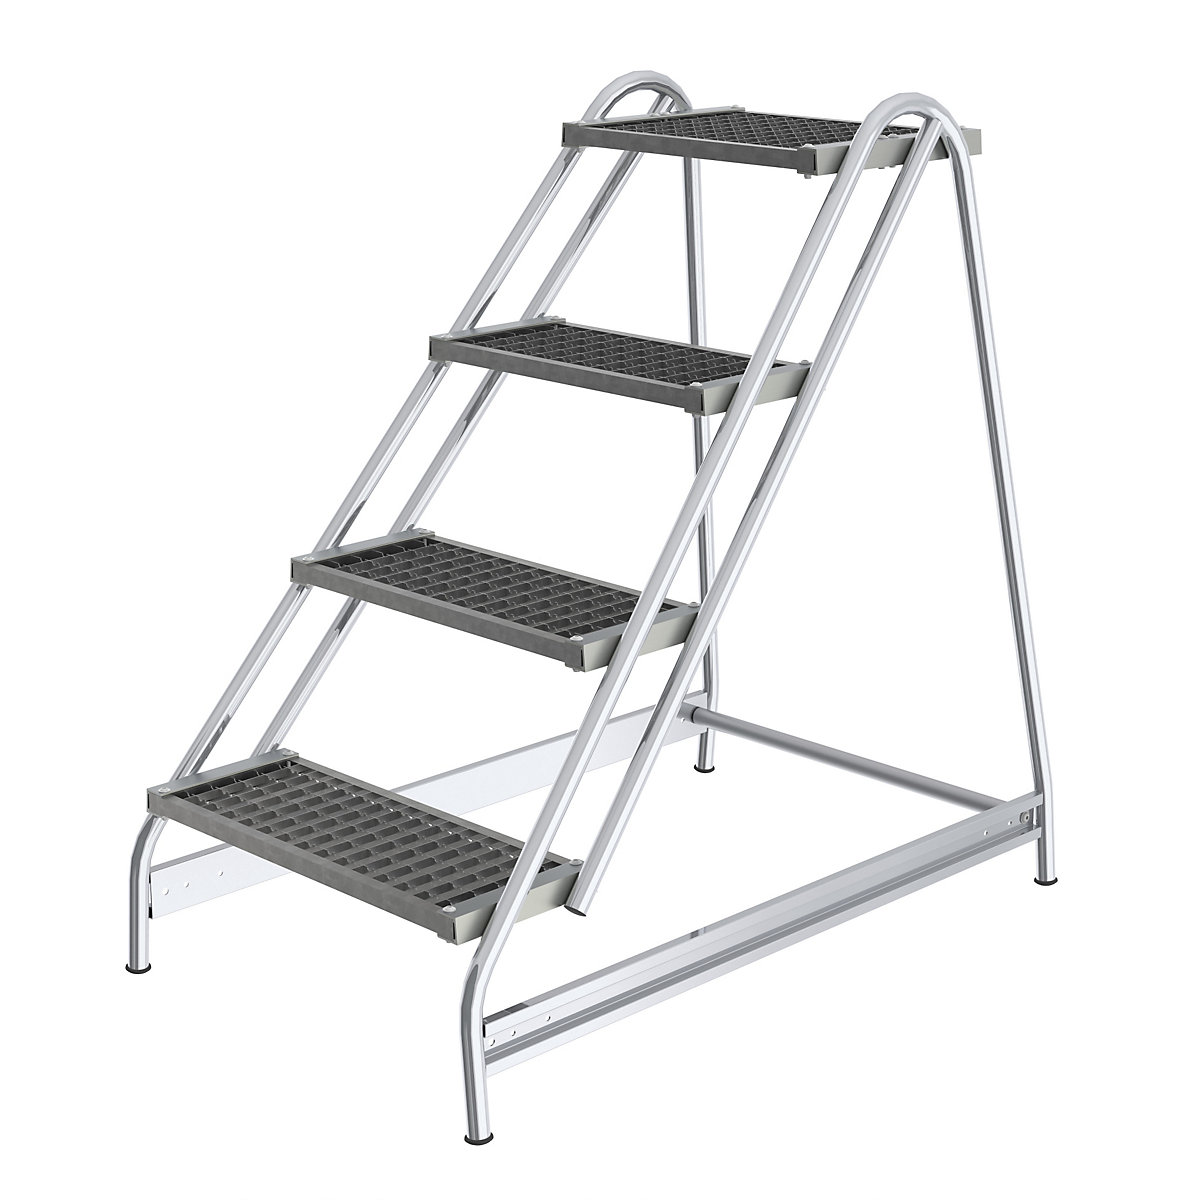 Aluminium work platform – MUNK, steps made of steel grate, single sided access, 4 steps-2